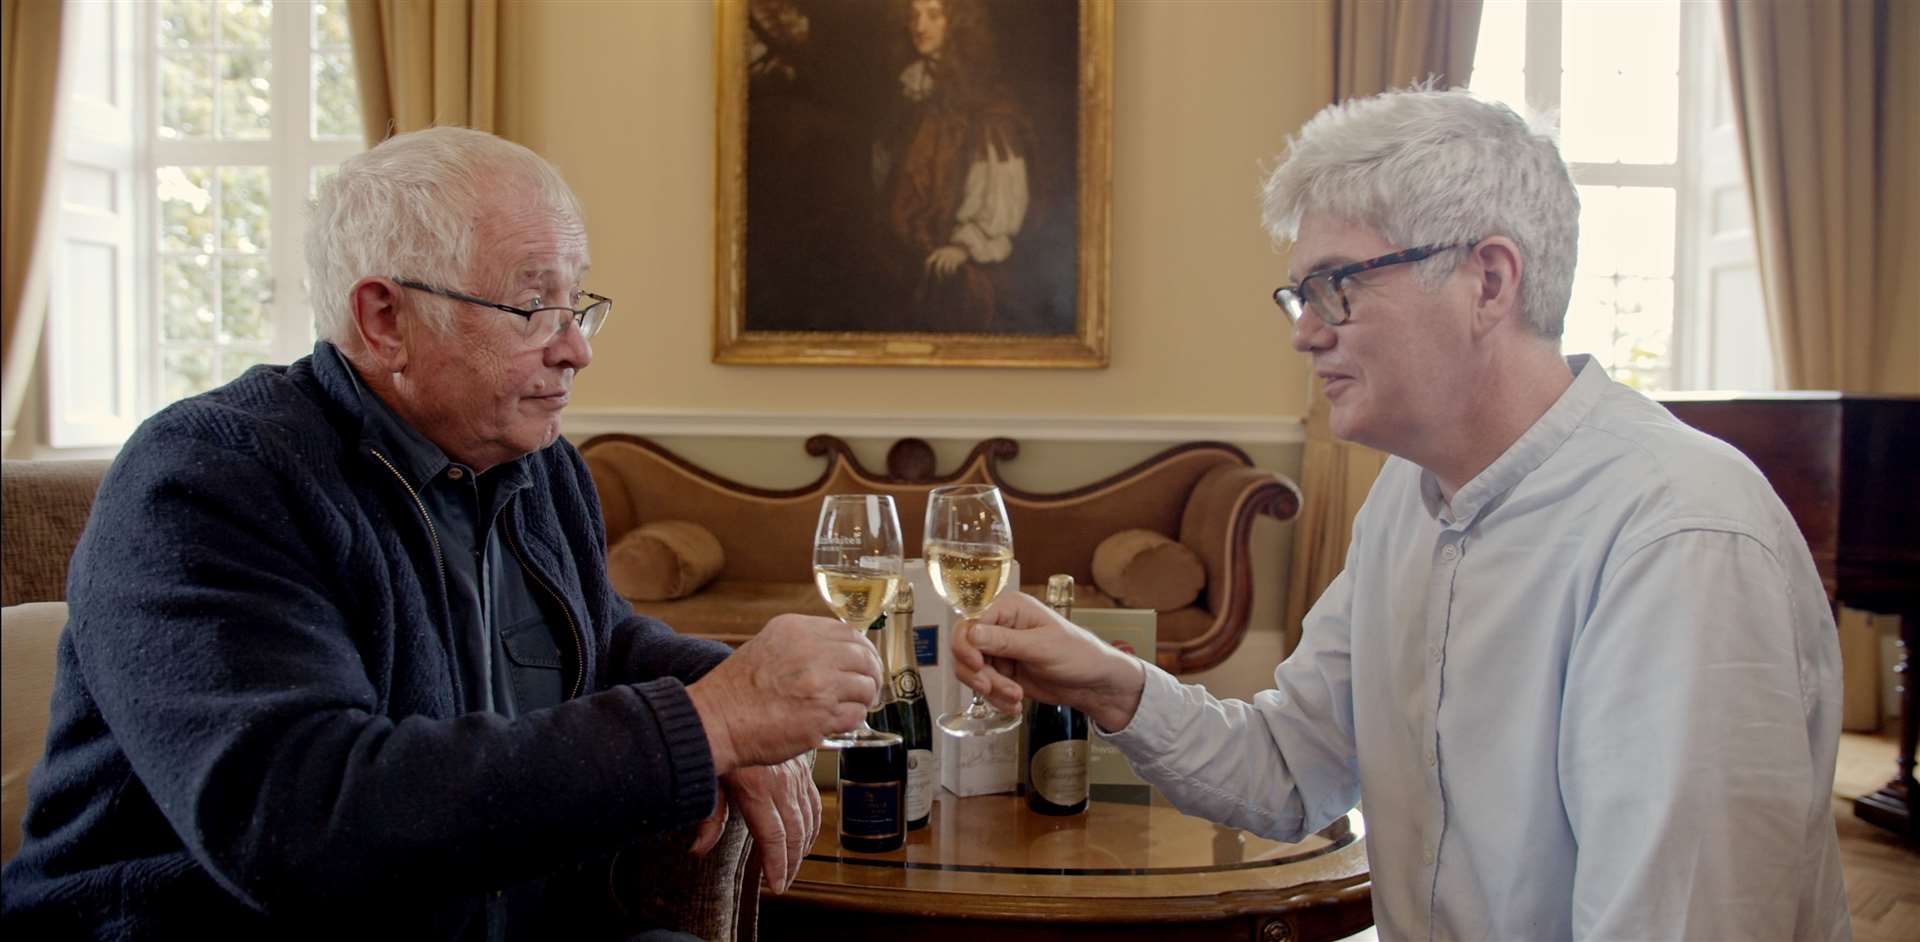 Tony Laithwaite Great Park winemaker and filmmaker Frank Mannion share a toast